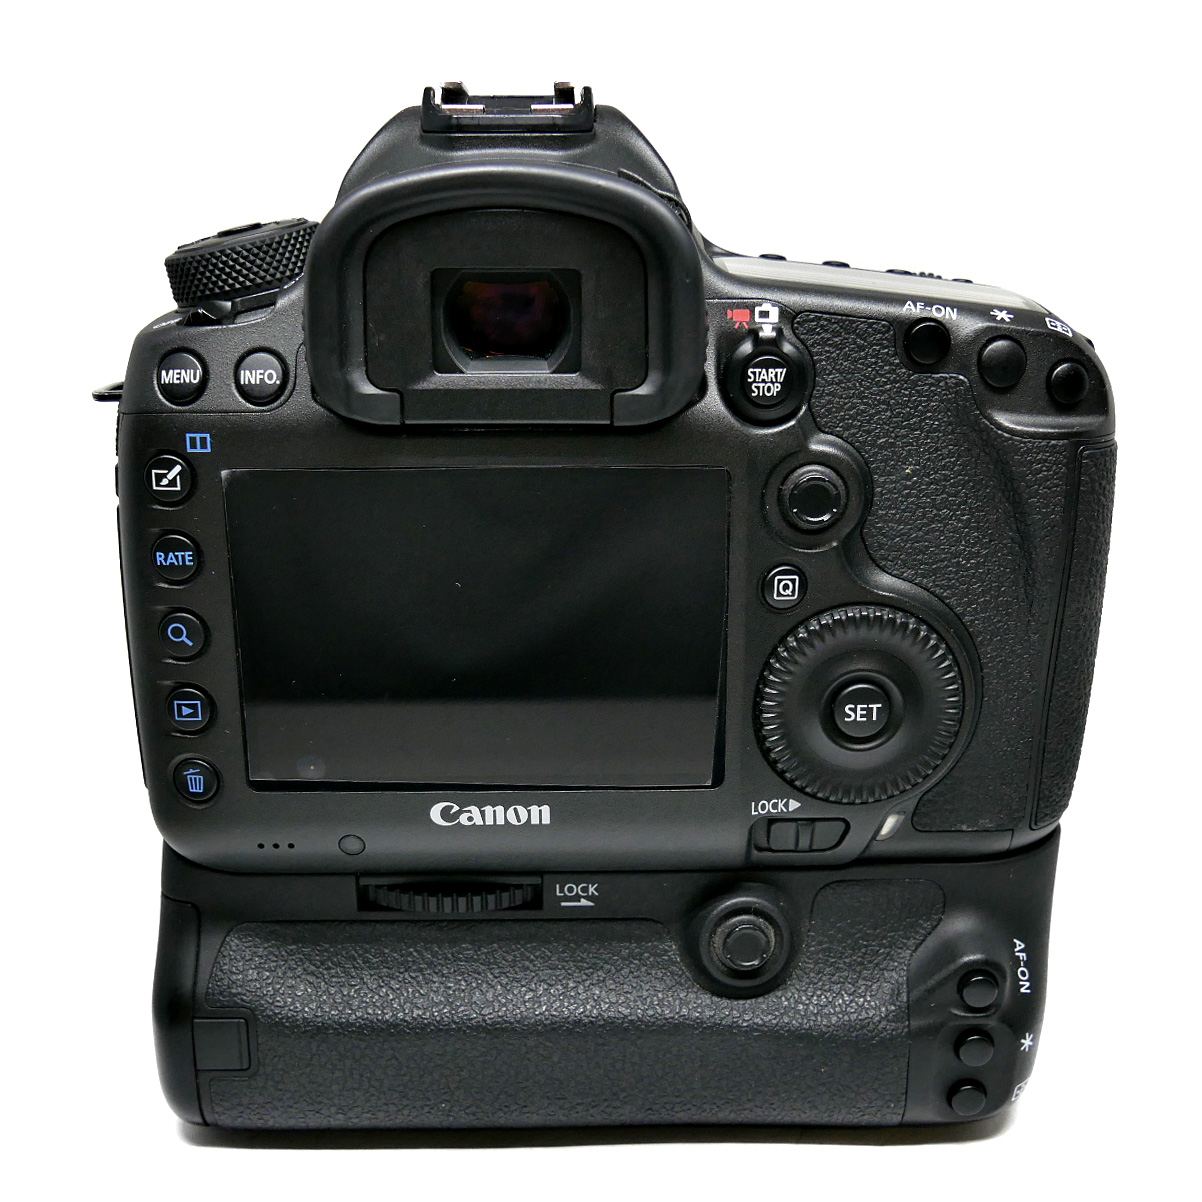 (Myyty) Canon EOS 5DS + BG-E11 akkukahva (SC:28460) (käytetty) sis. ALV